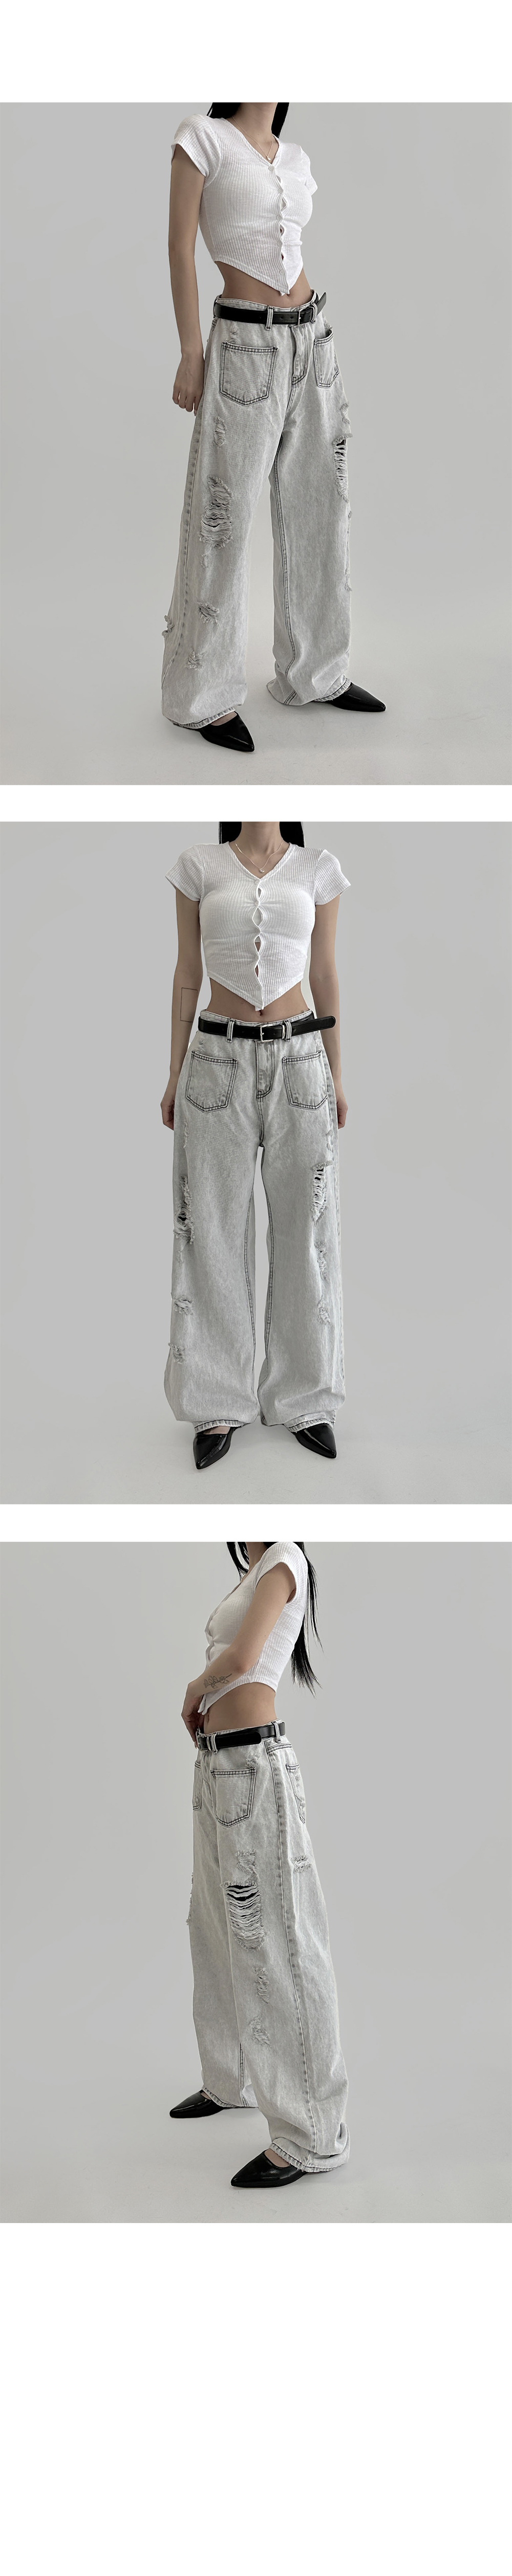 suspenders skirt/pants grey color image-S1L5